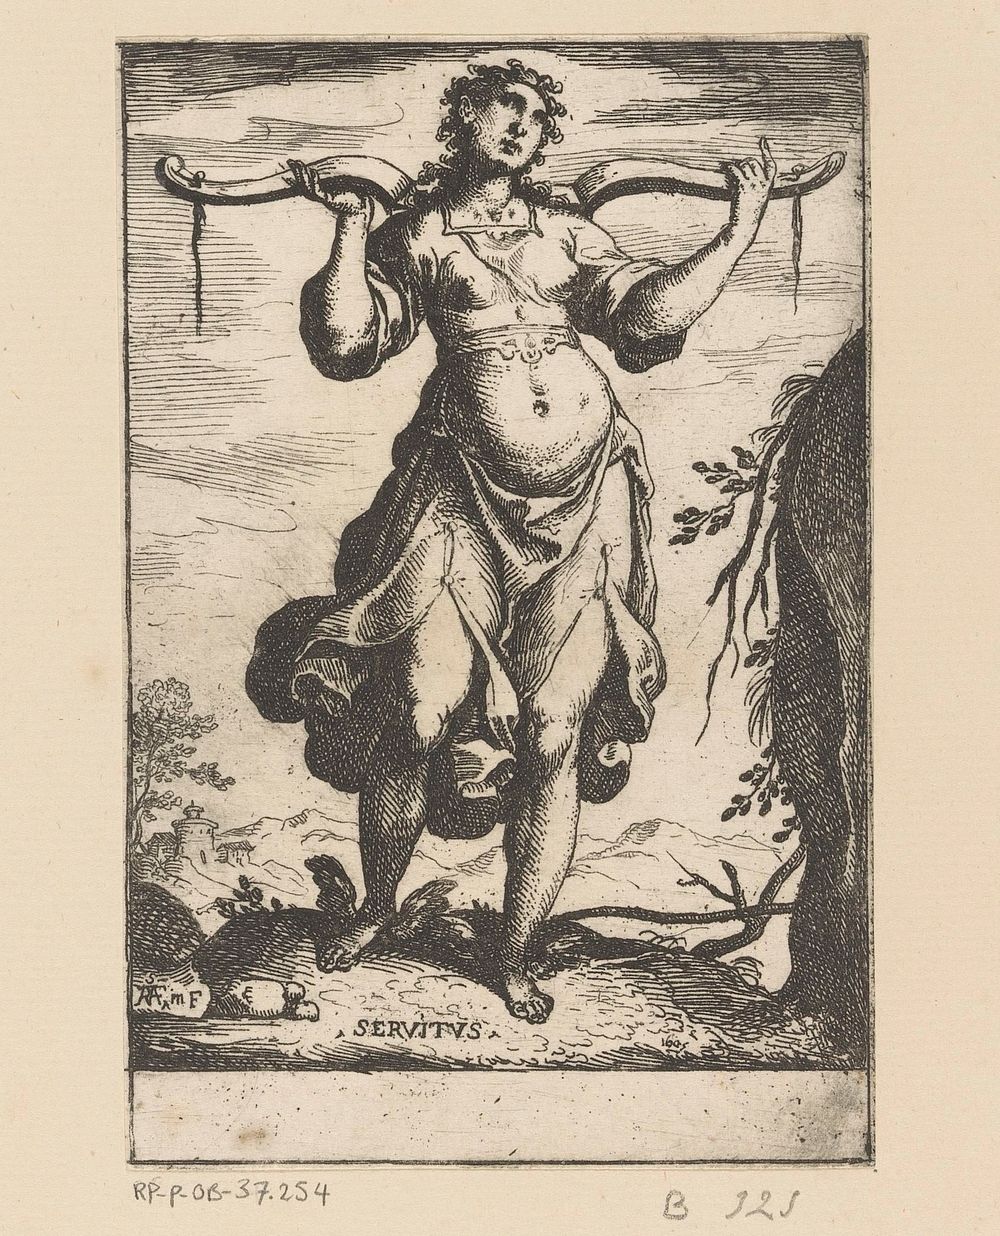 Dienstbaarheid (1605) by Raffaello Schiaminossi and Raffaello Schiaminossi